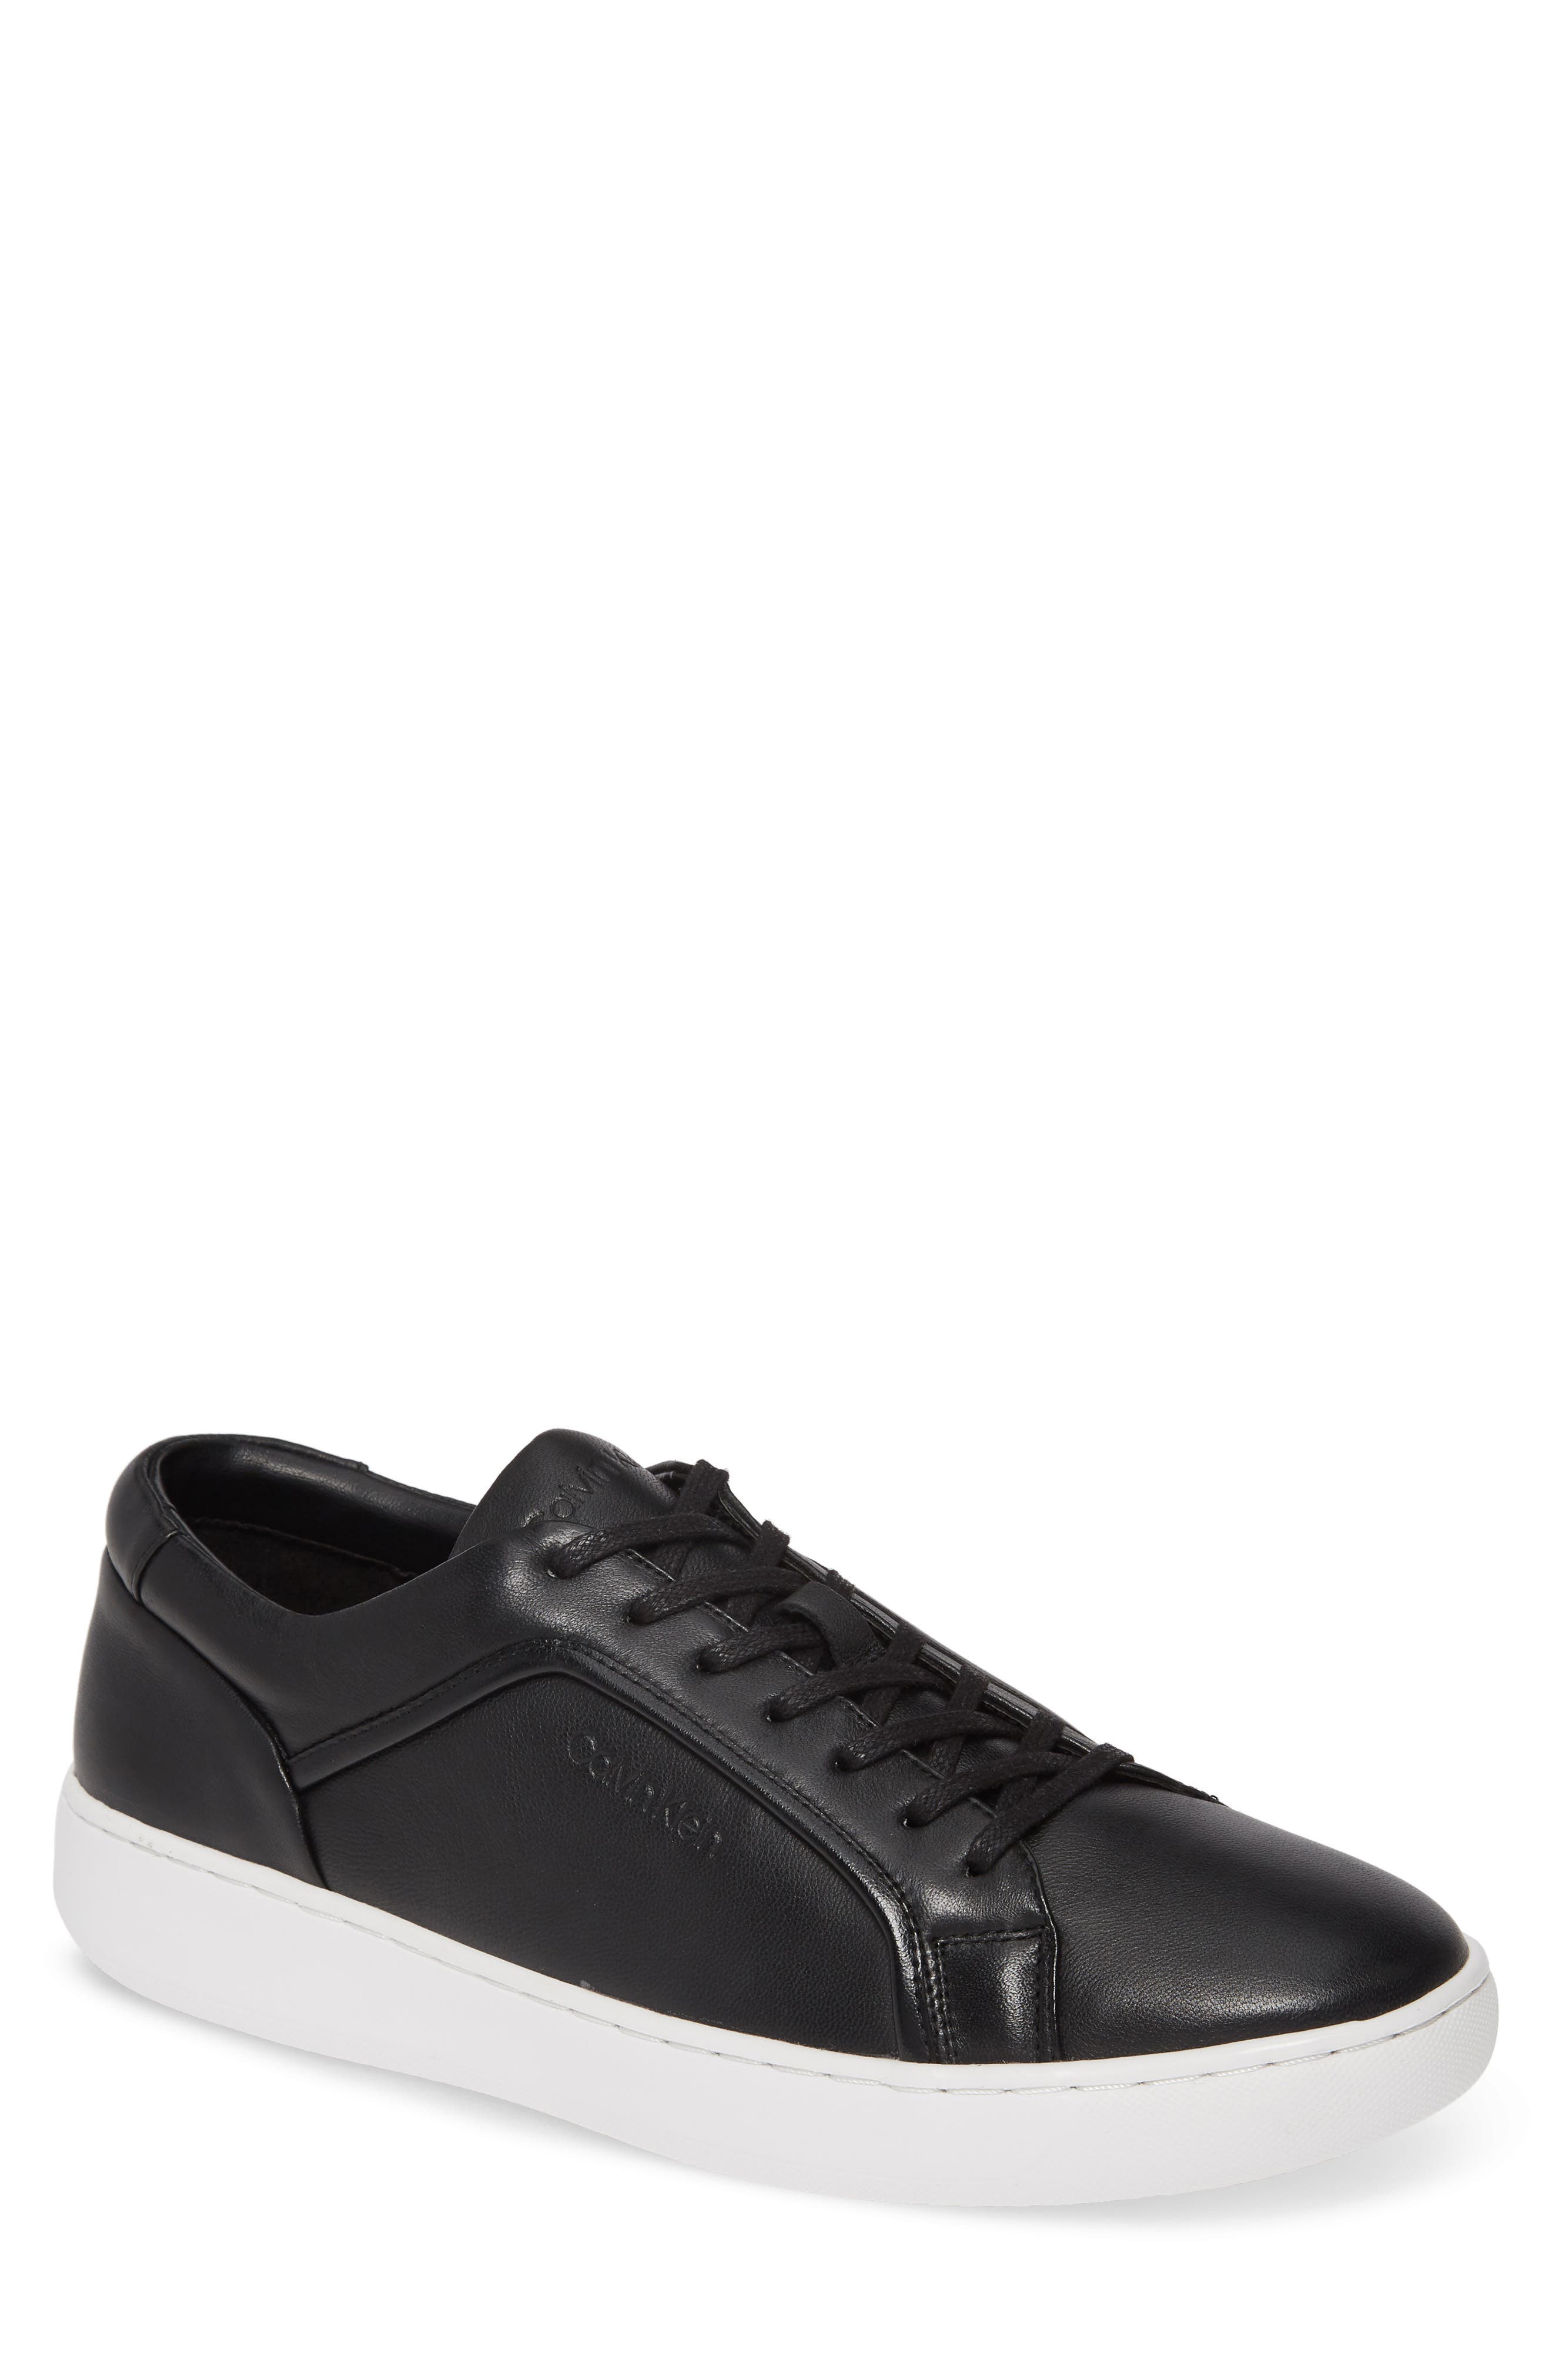 calvin klein black leather sneakers